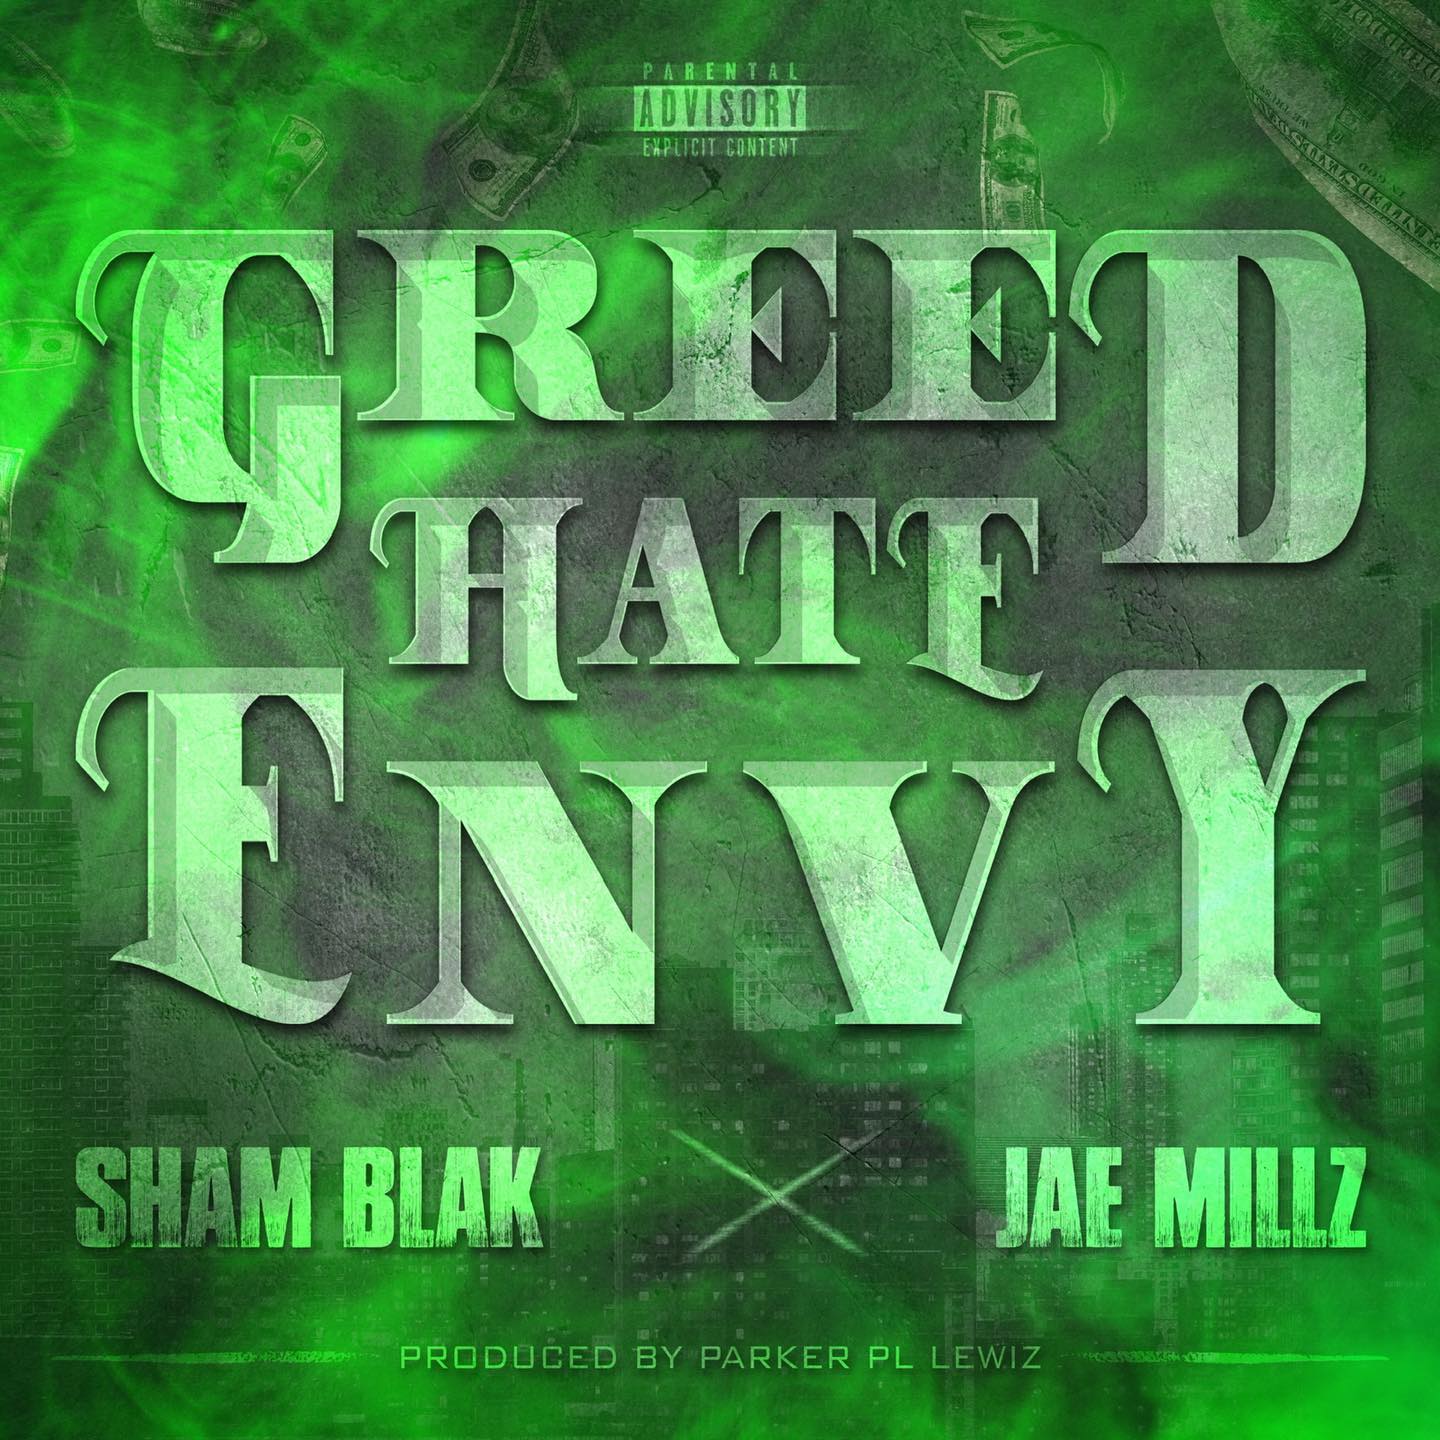 Sham Blak Feat. Jae Millz – Greed Hate Envy (Official Video)